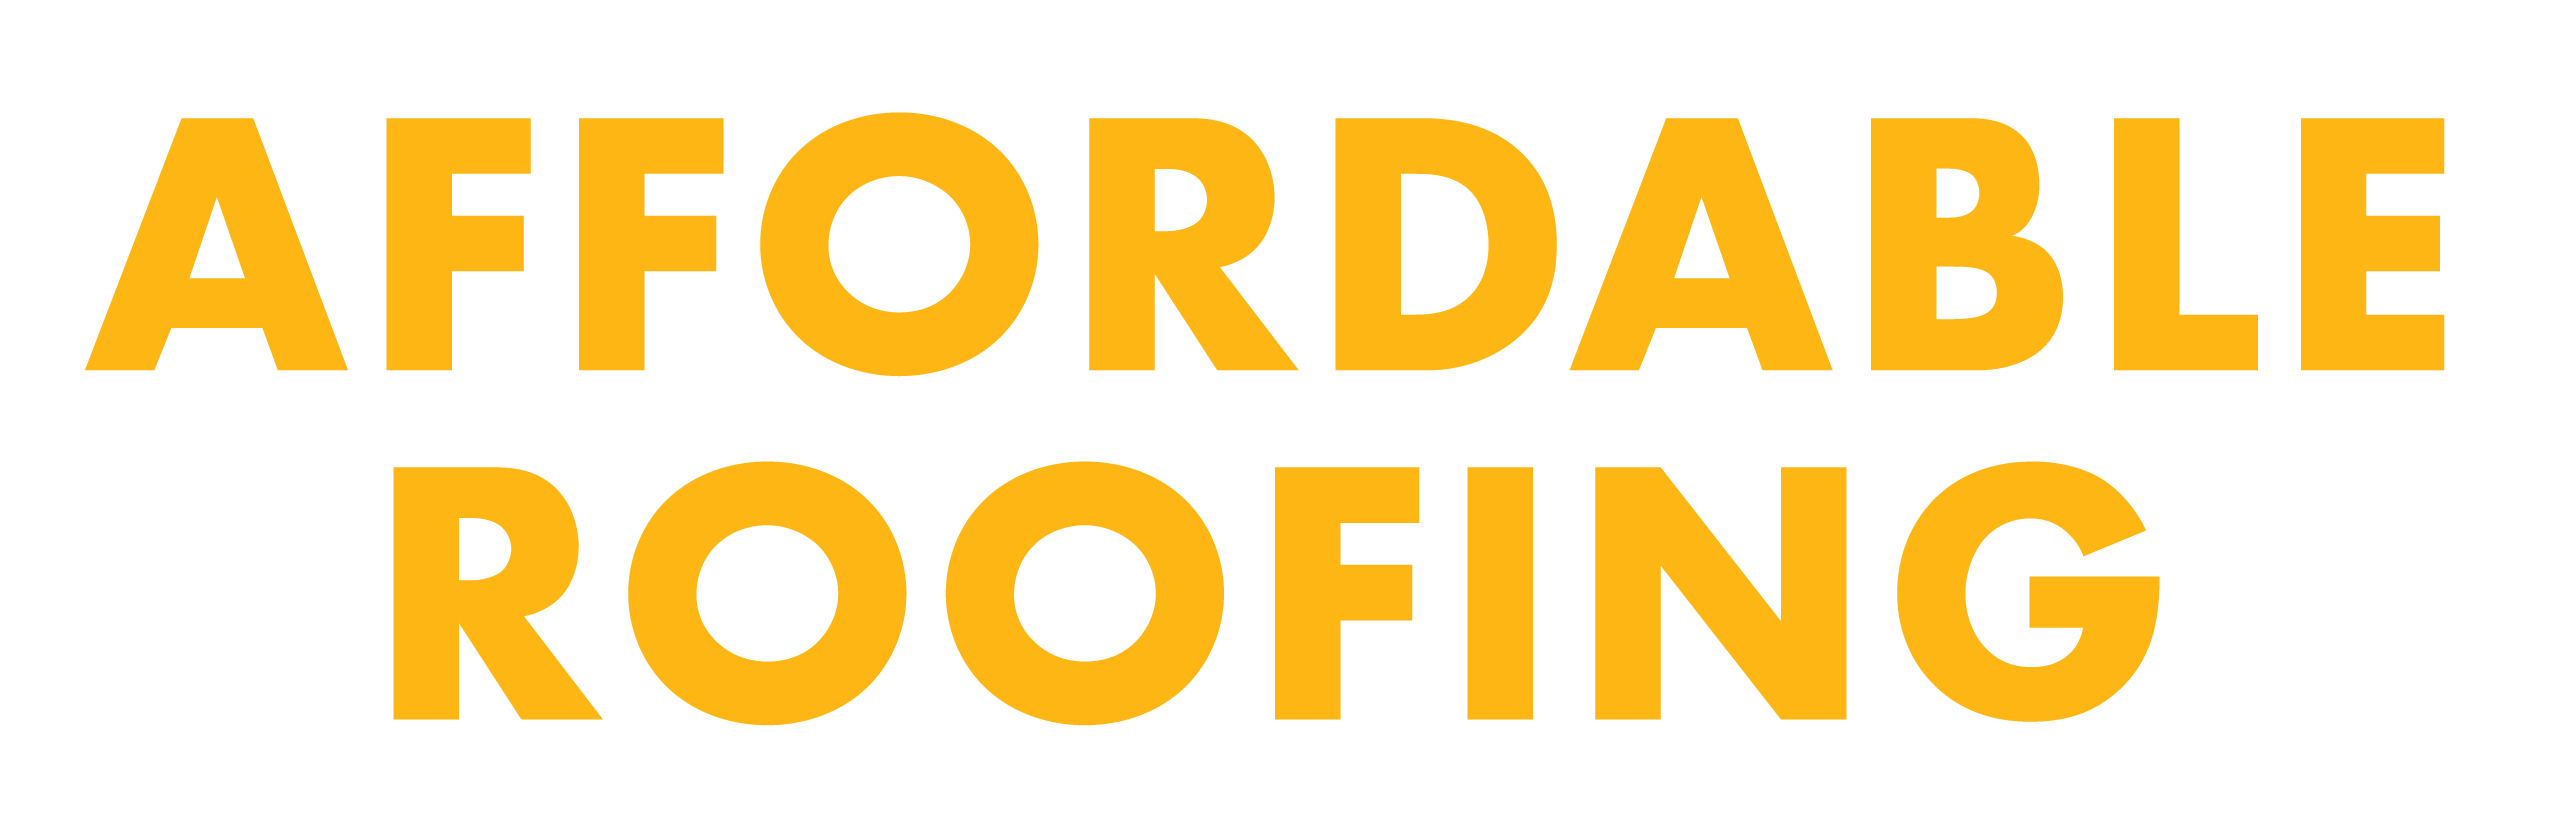 Affordable Roofing Logo 4